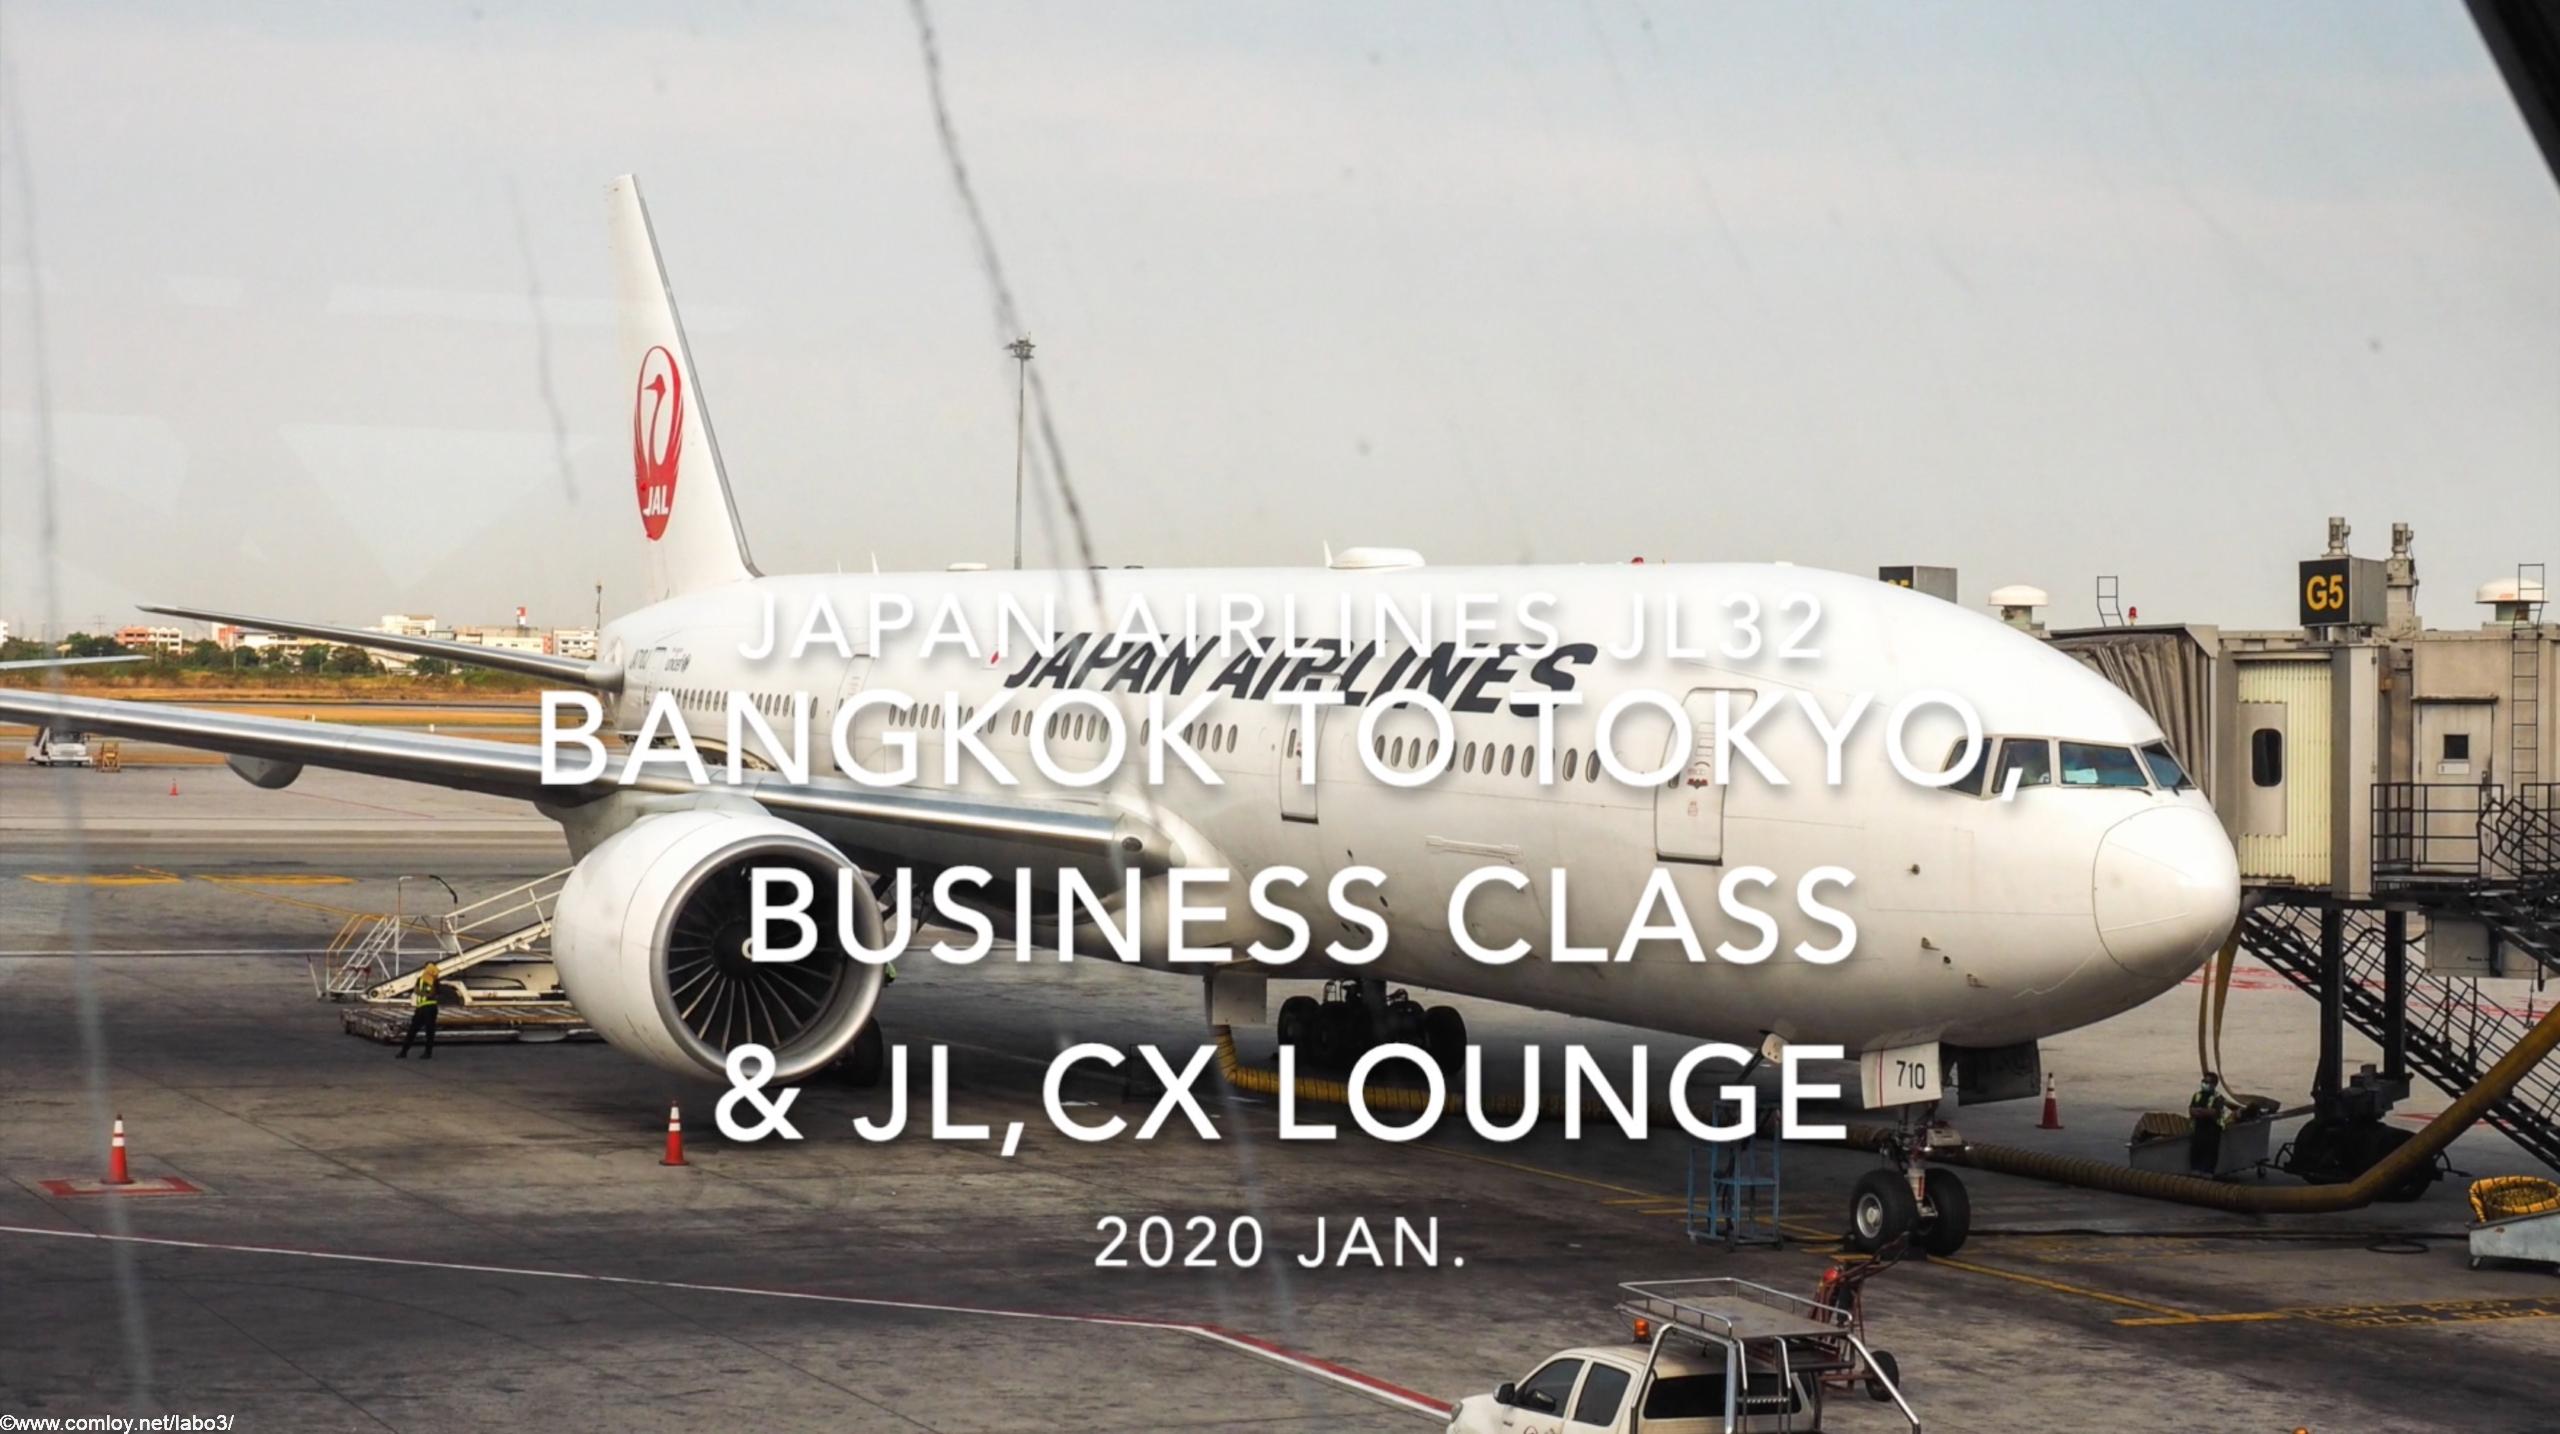 【Flight Report】2020 Jan Japan airlines JL32 BANGKOK TO TOKYO HANEDA Business Class &JL, CX LOUNGE